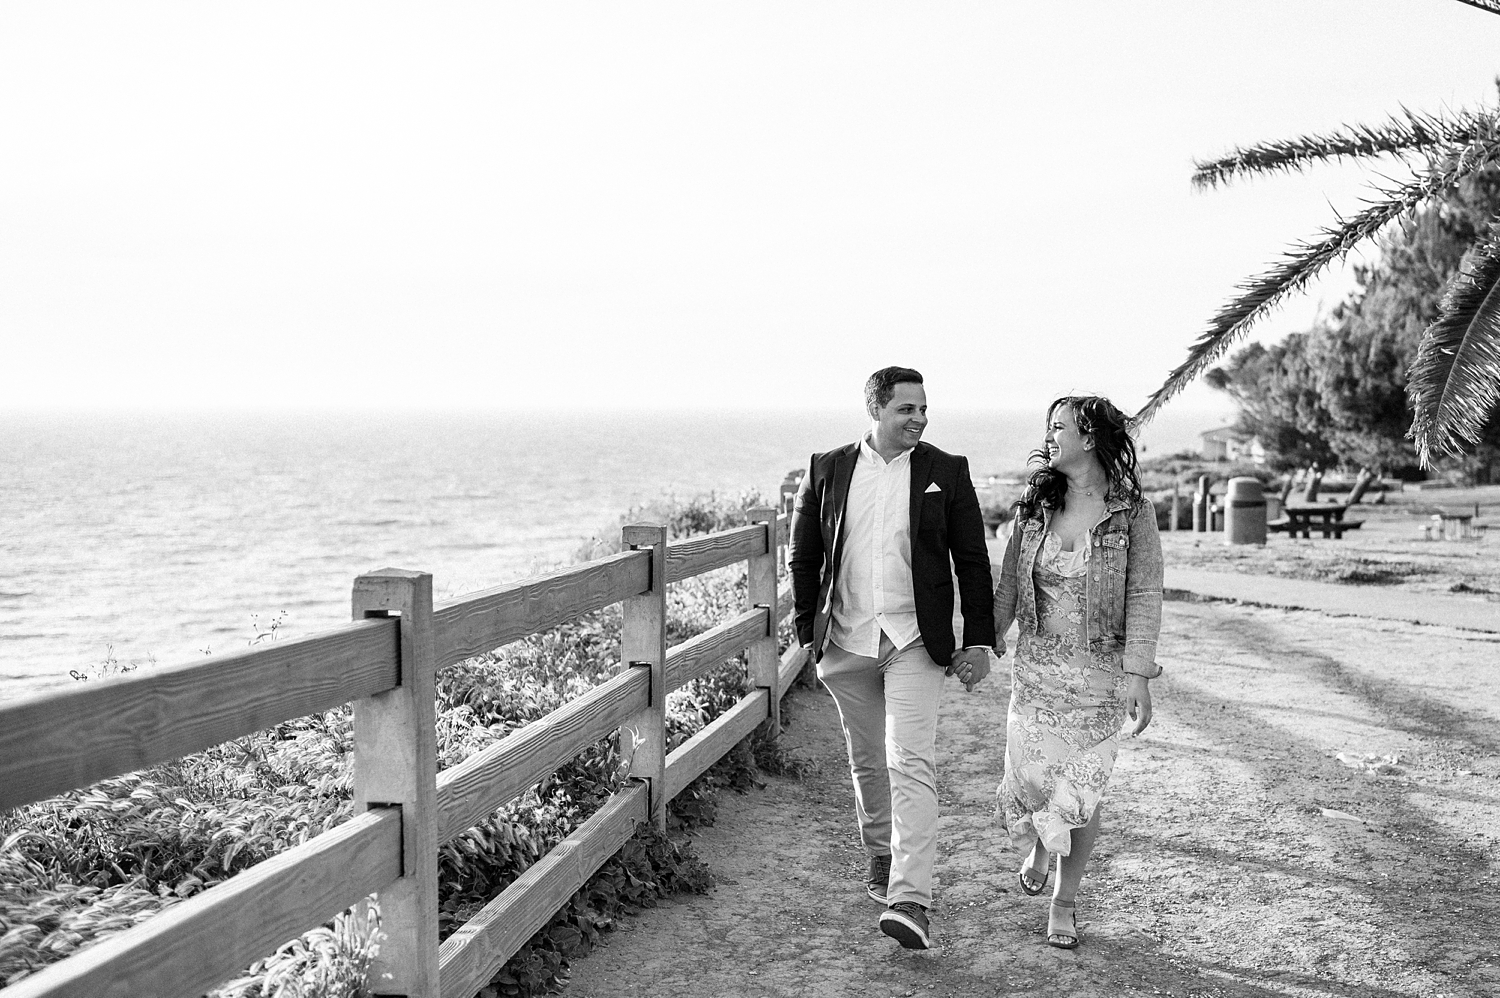 Palos Verdes Lighthouse Engagement Photos at Sunset | Wedding Photographer -160.jpg